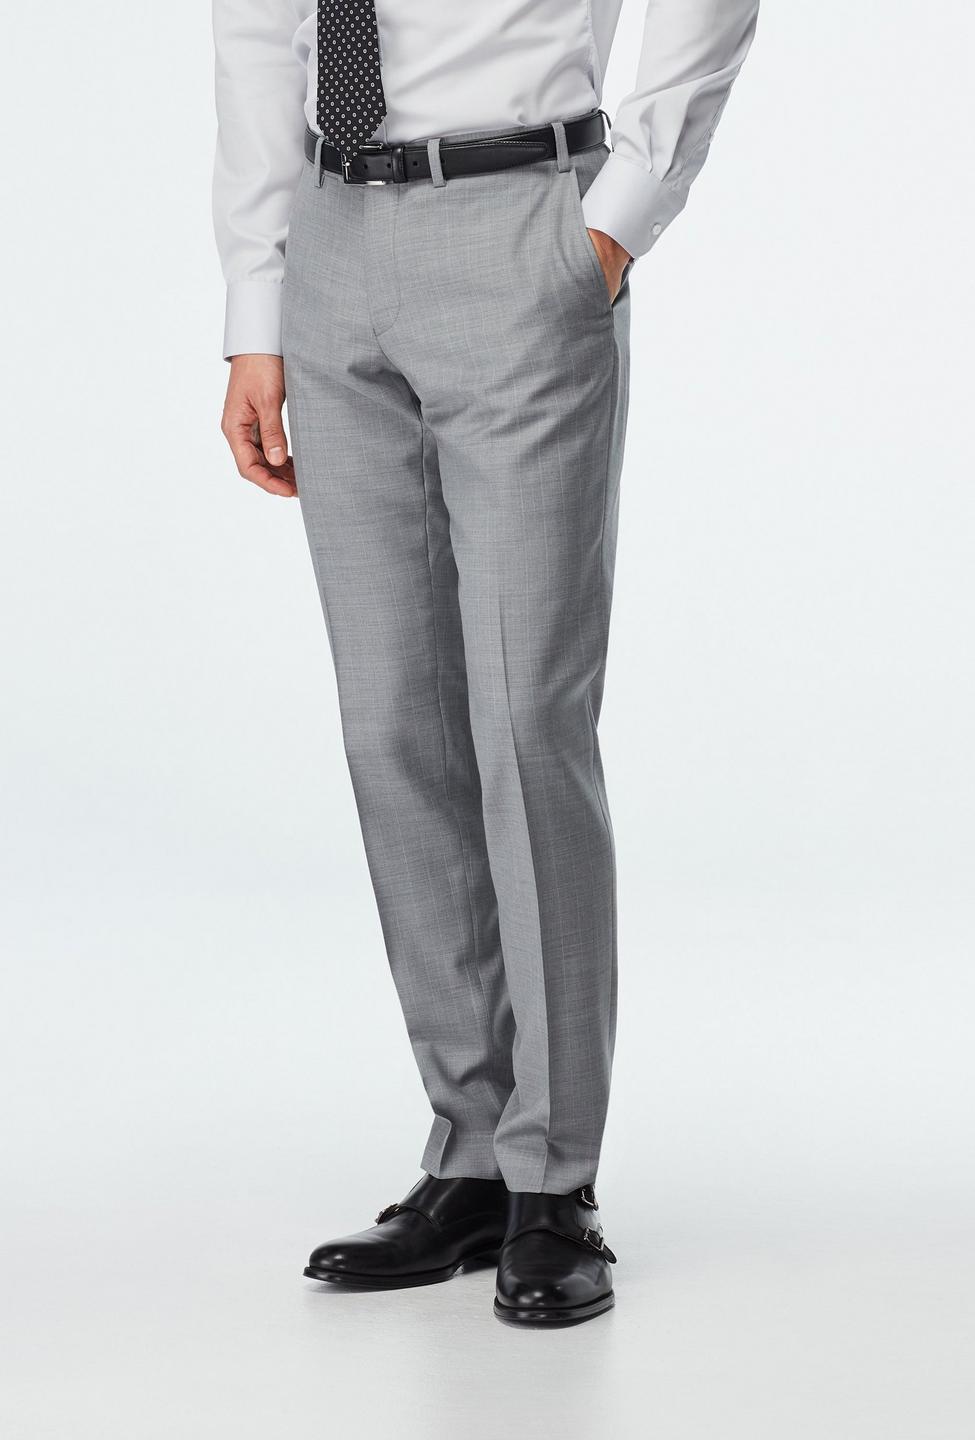 Hemsworth Stripe Light Gray Pants